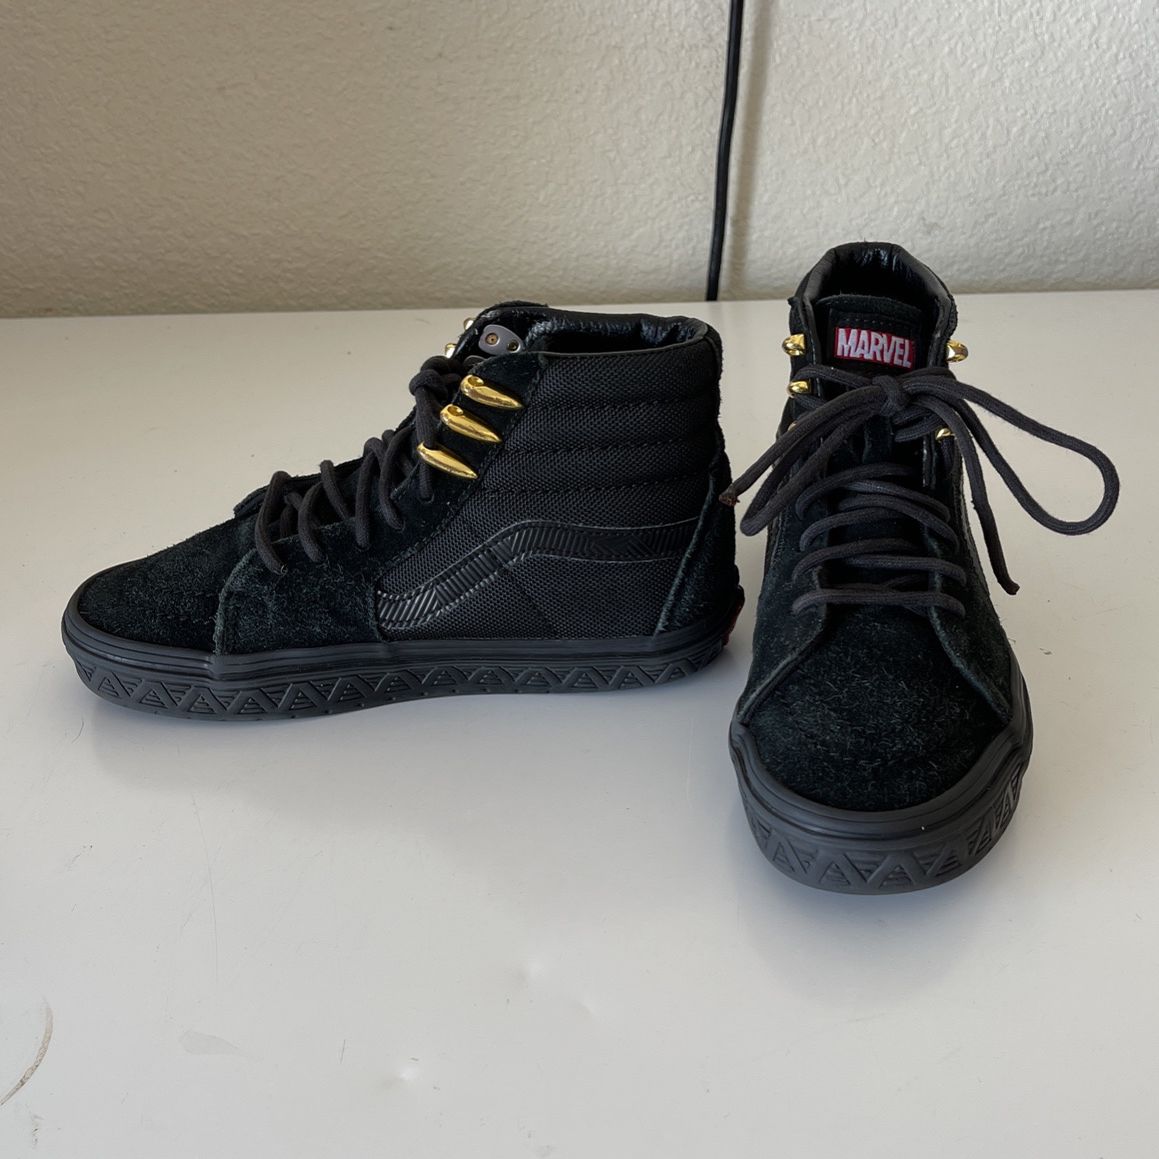 VANS x MARVEL Black Panther 616's #1 Skateboard Shoes 4 Men for Sale in Palmview, TX - OfferUp